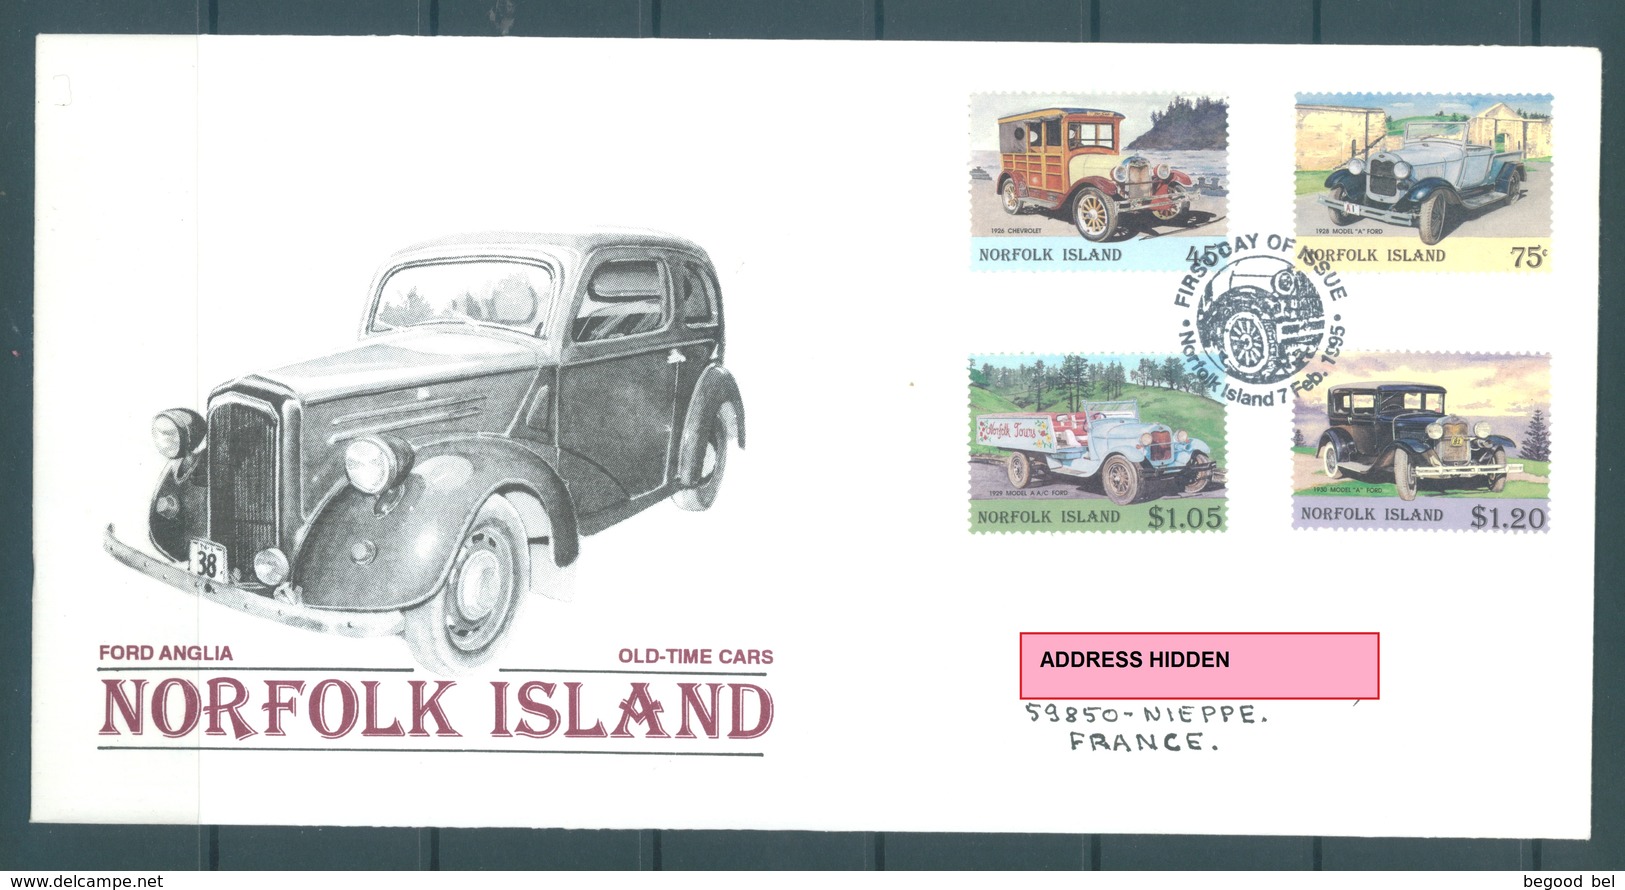 NORFOLK ISLANDS  - 7.2.1995 - FDC - OLD TIME CARS - Yv 567-568  SG  583-586 - Lot 16944 - LIGHT HINGED AT BACKSIDE - Norfolk Island